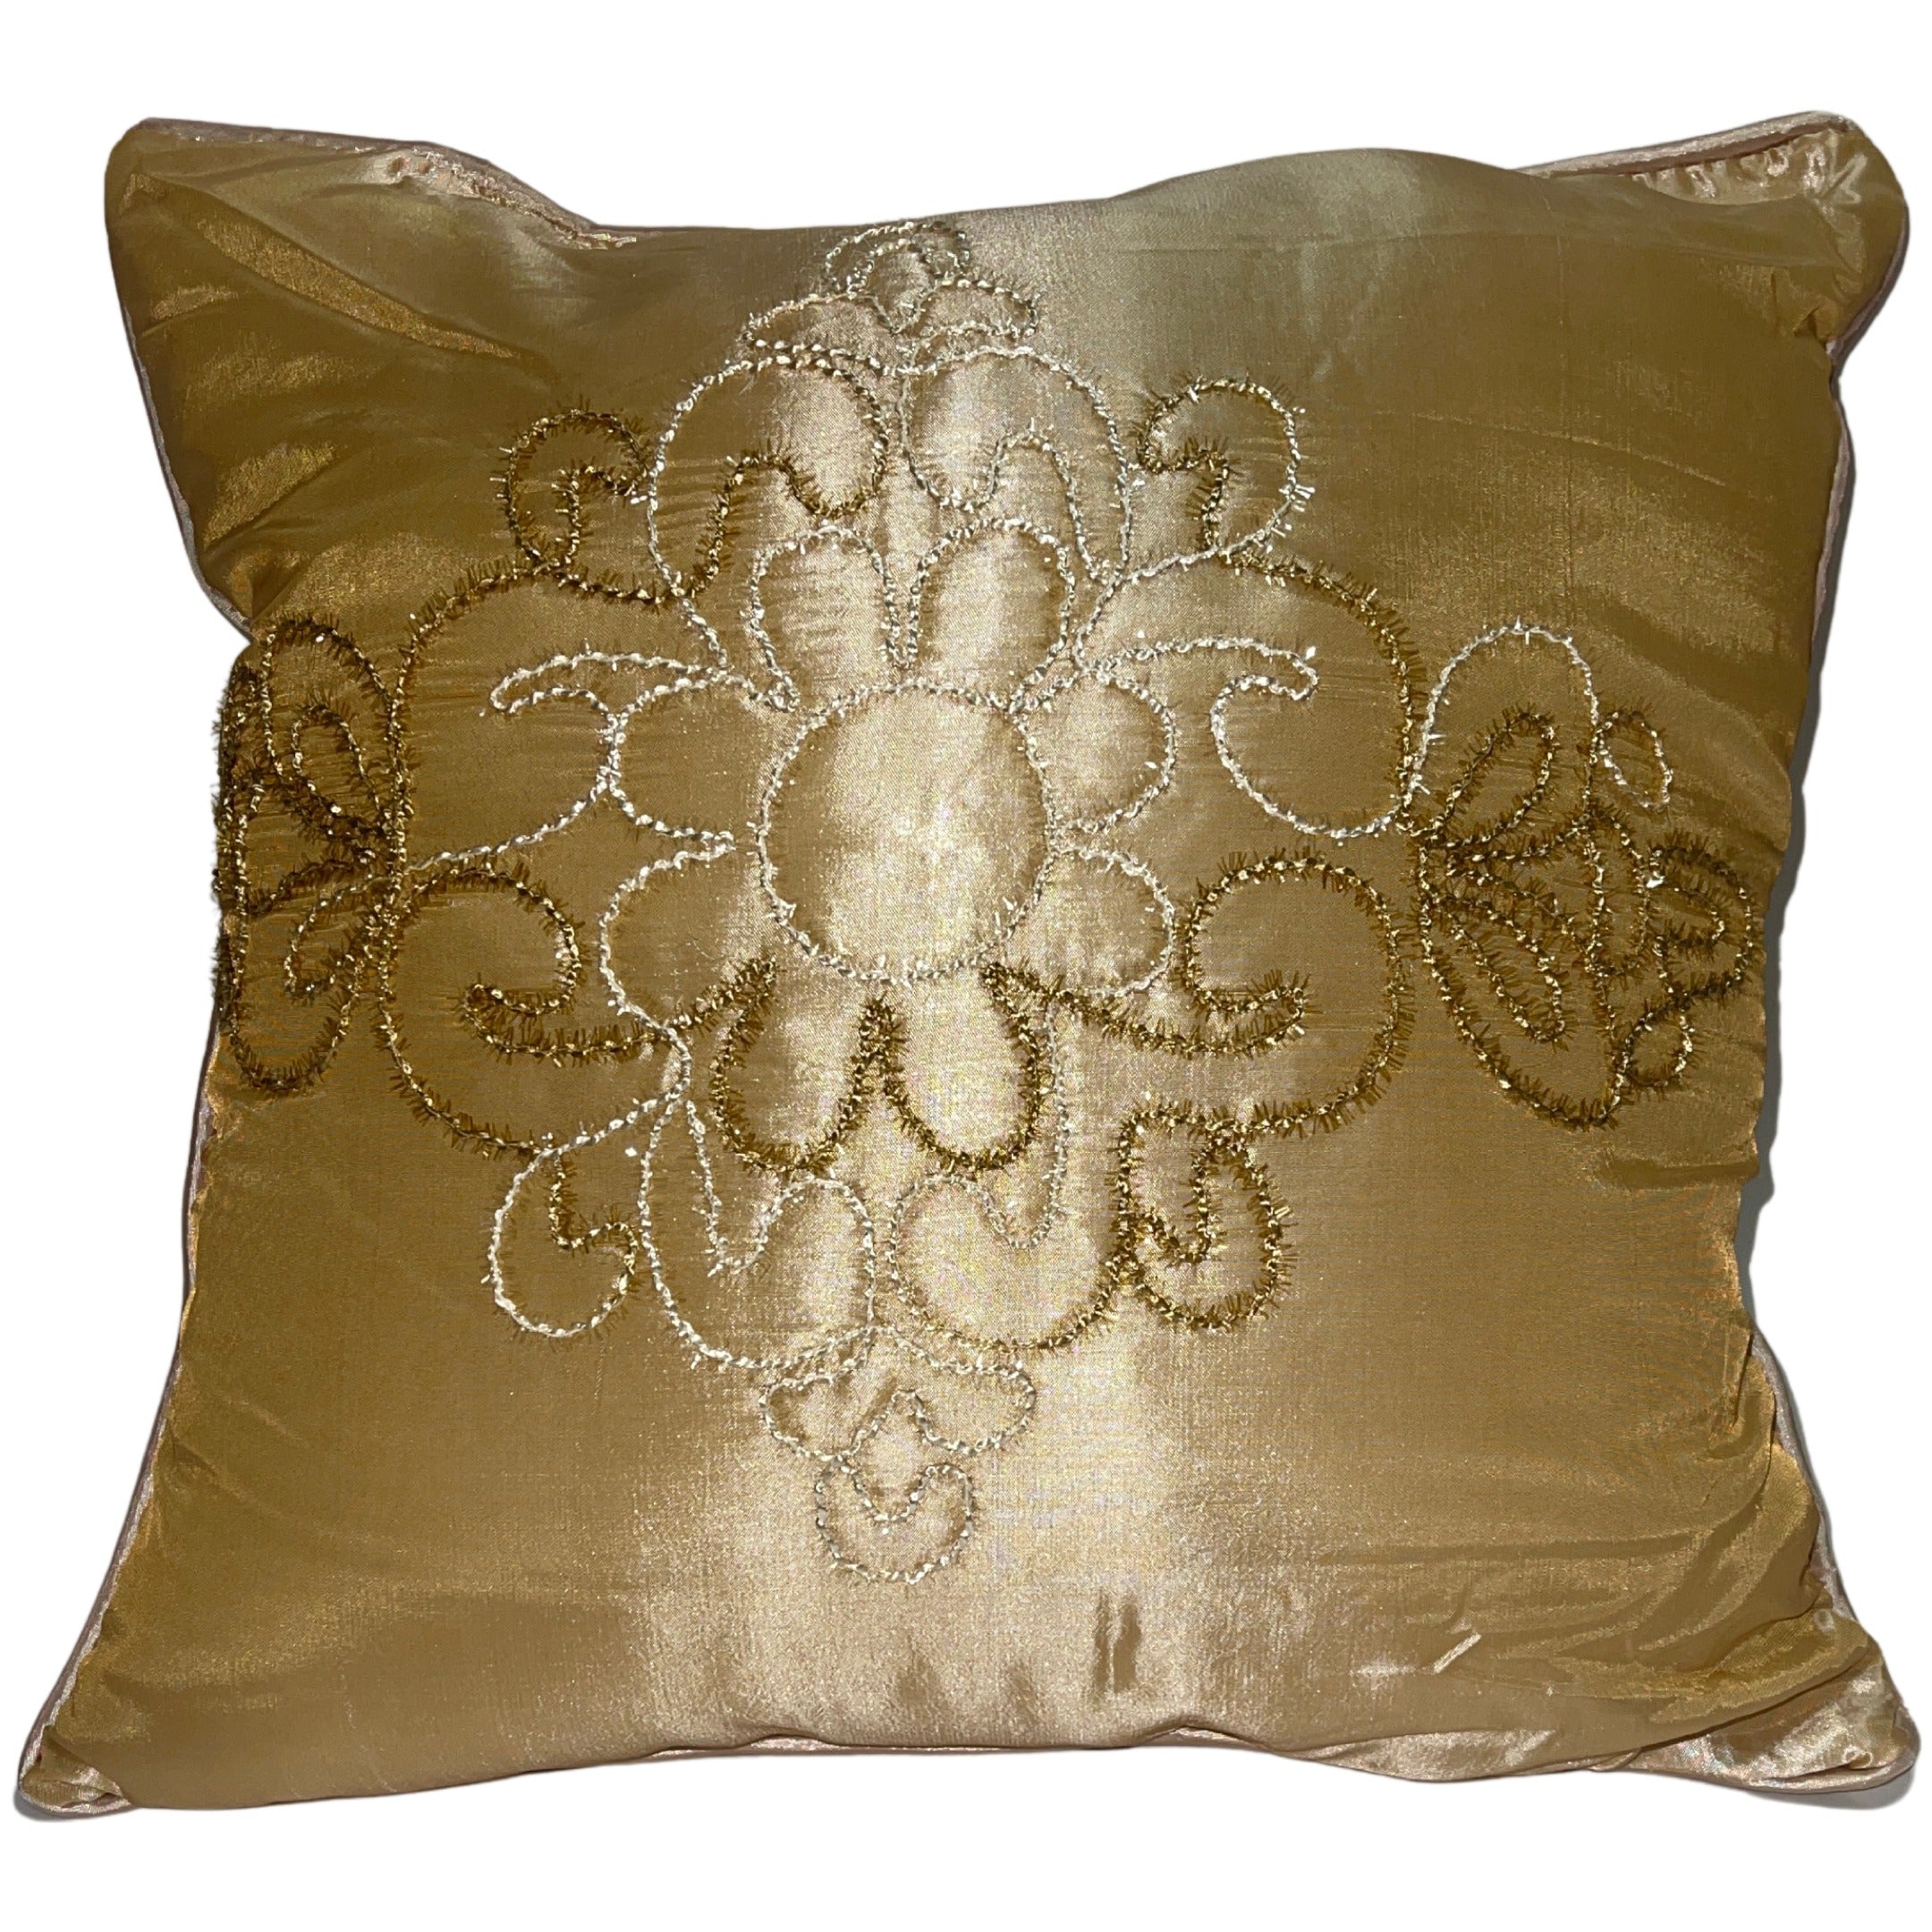 Joycy 7 Piece Embellished Comforter Set, Gold